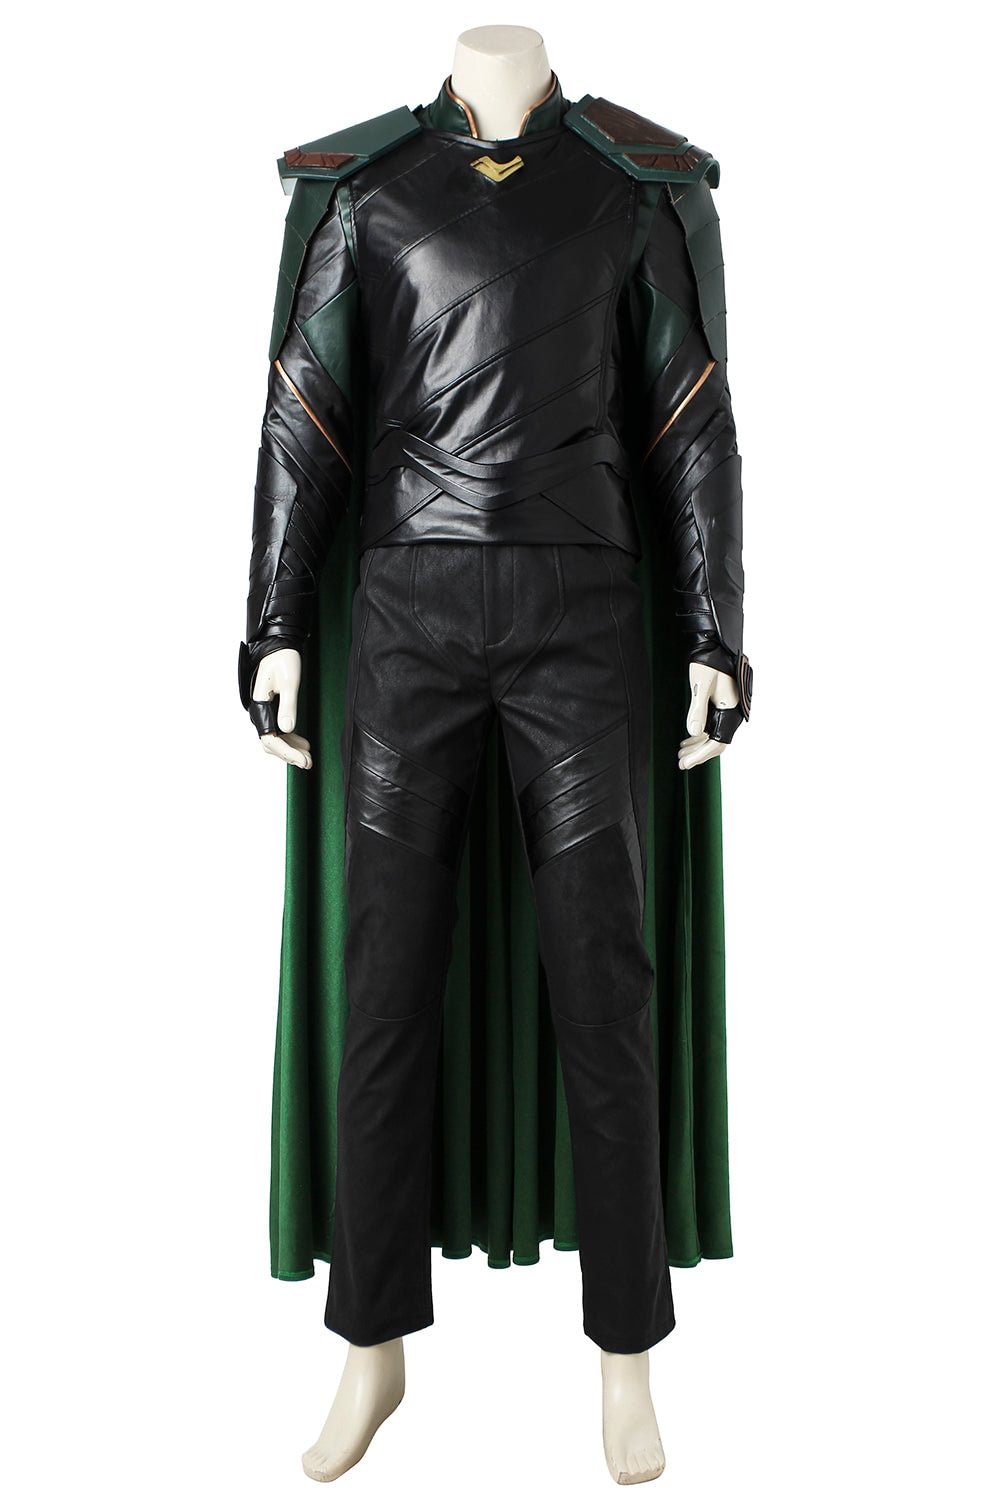 Marvel Thor 3 Ragnarok Loki Outfit Cosplay Costume